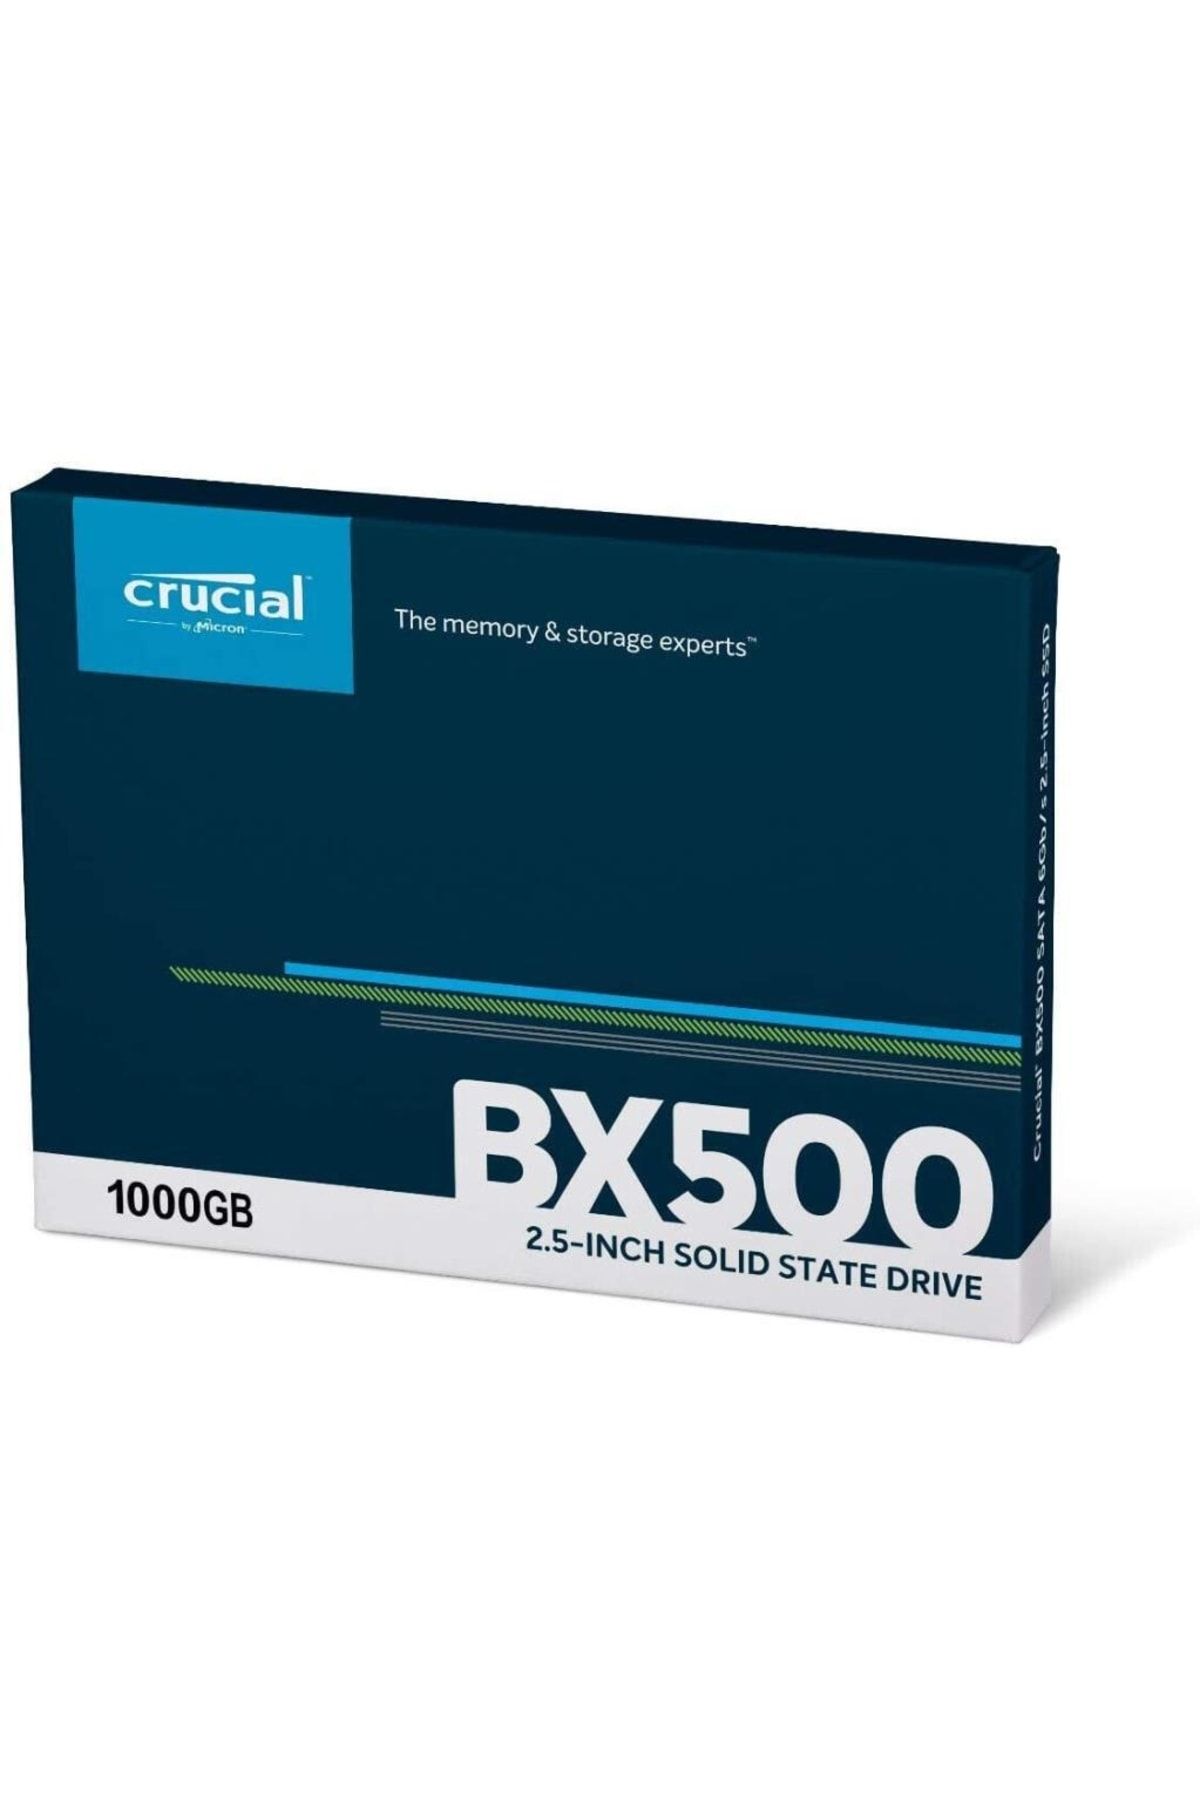 Crucial Bx500 1tb Ssd Disk Ct1000bx500ssd1